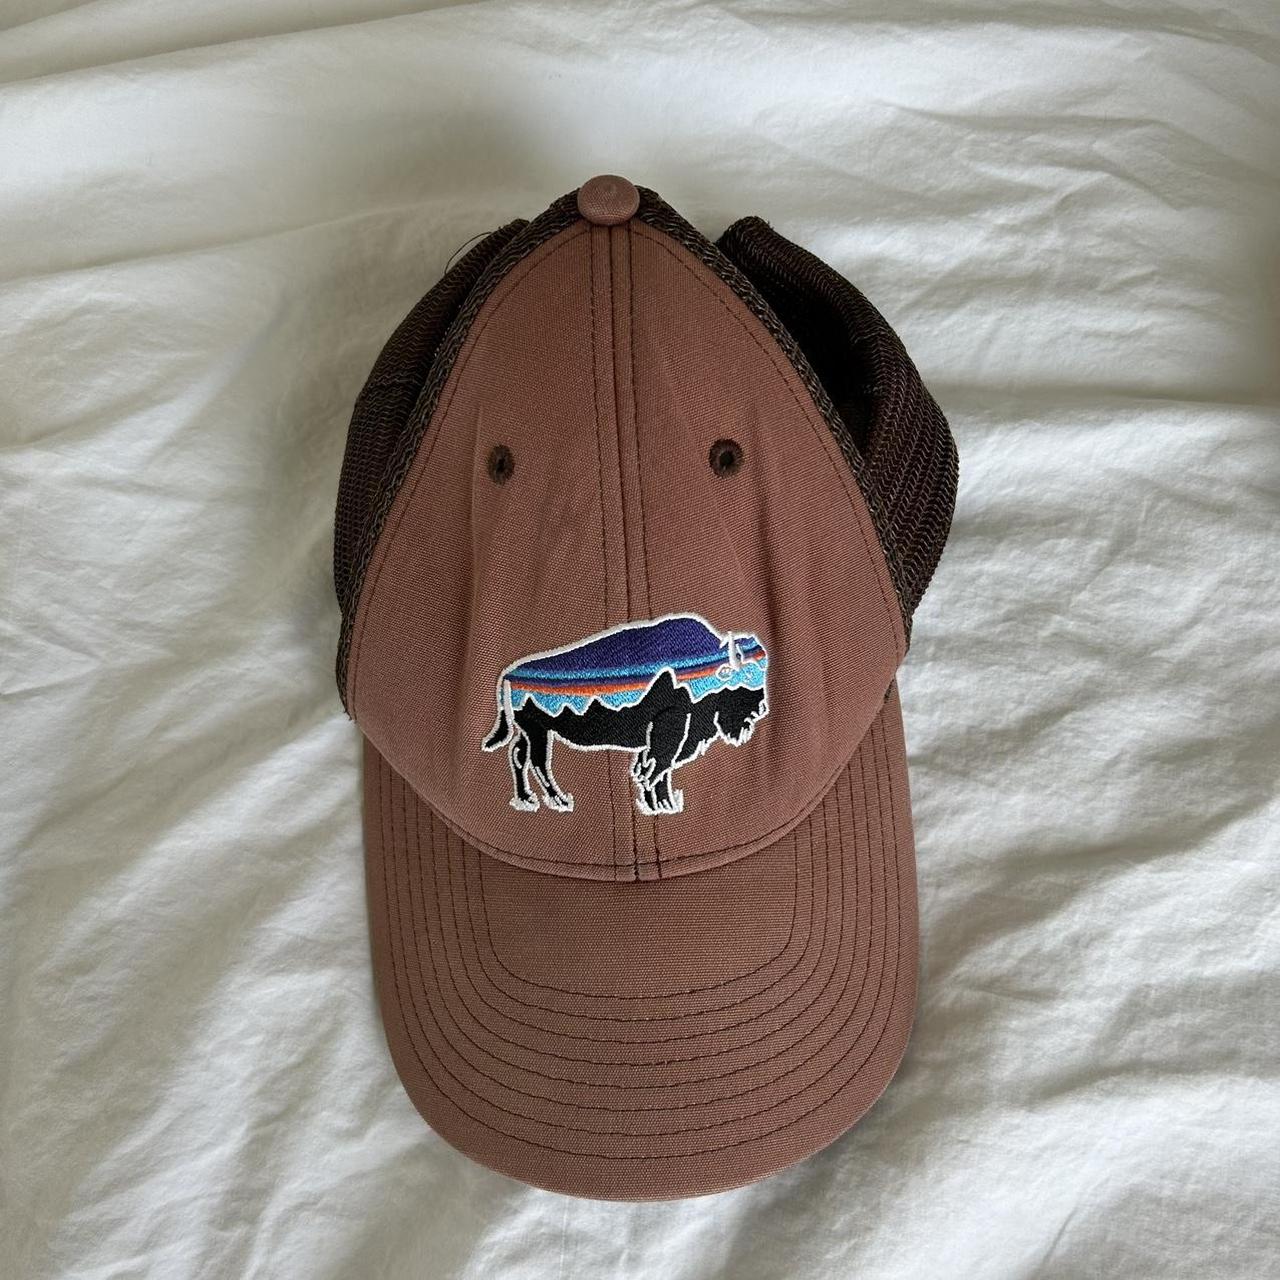 Patagonia Fitzroy Bison Trucker Hat - Men's